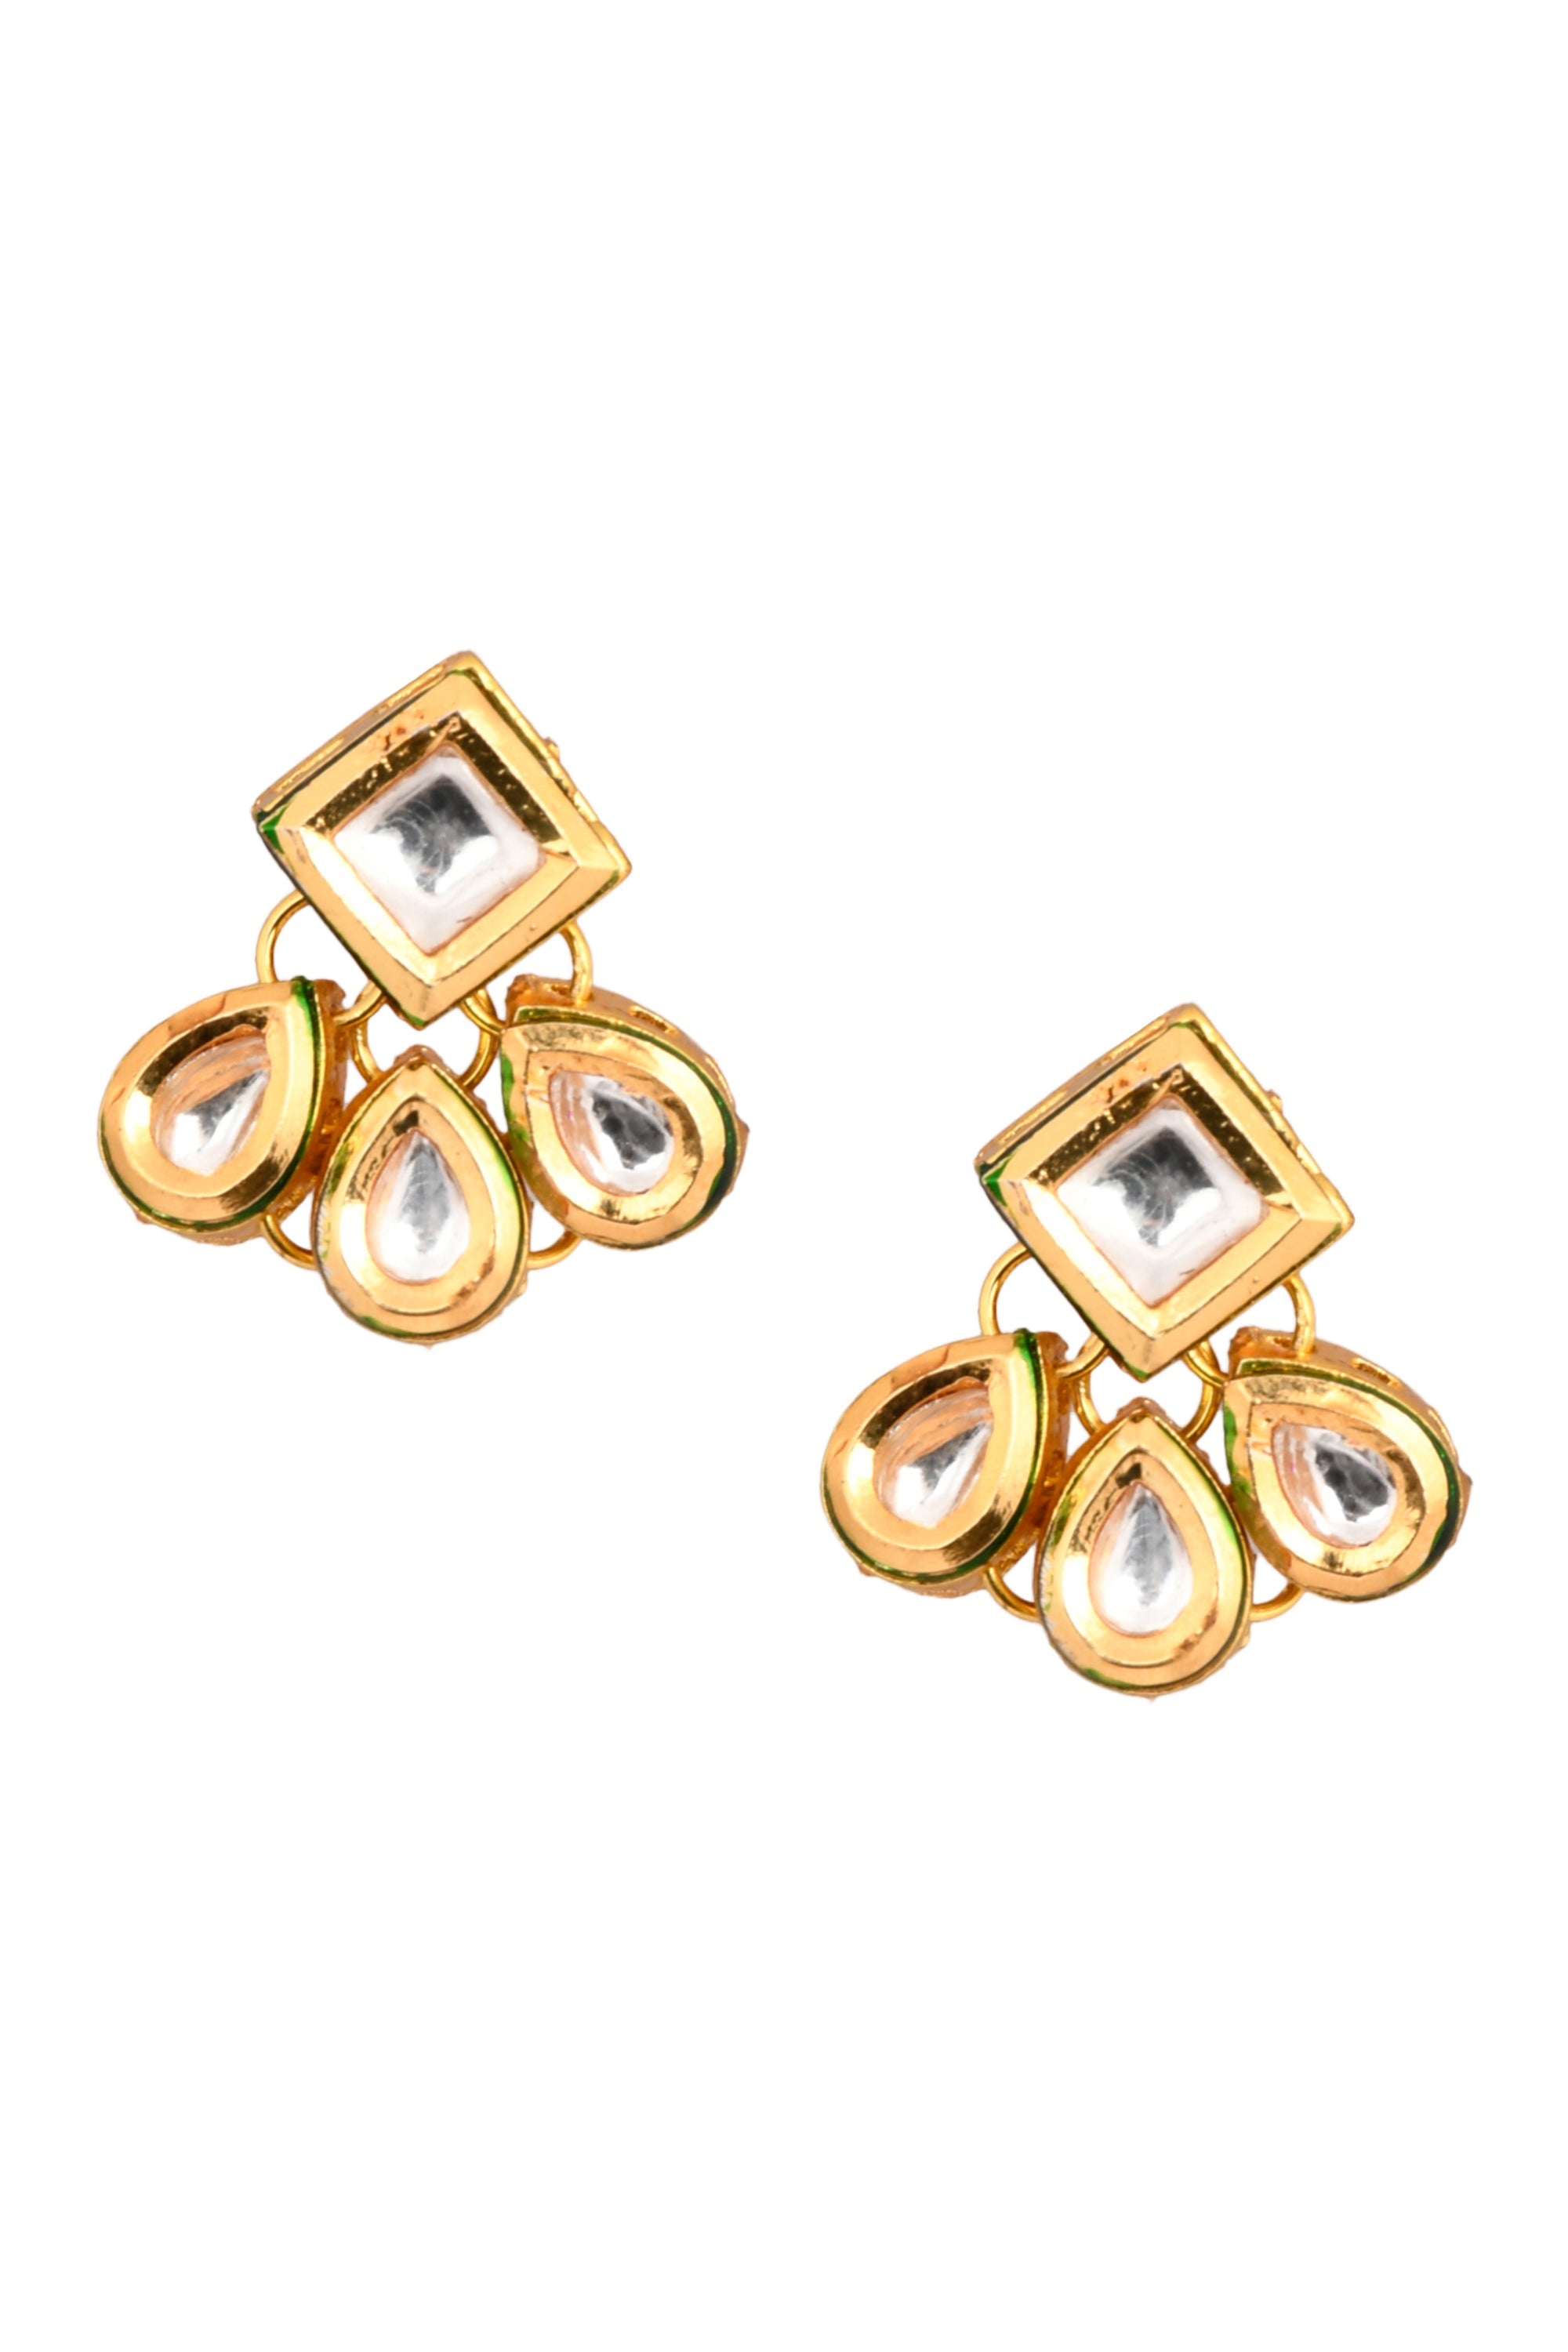 Gold tone Kundan inspired earrings